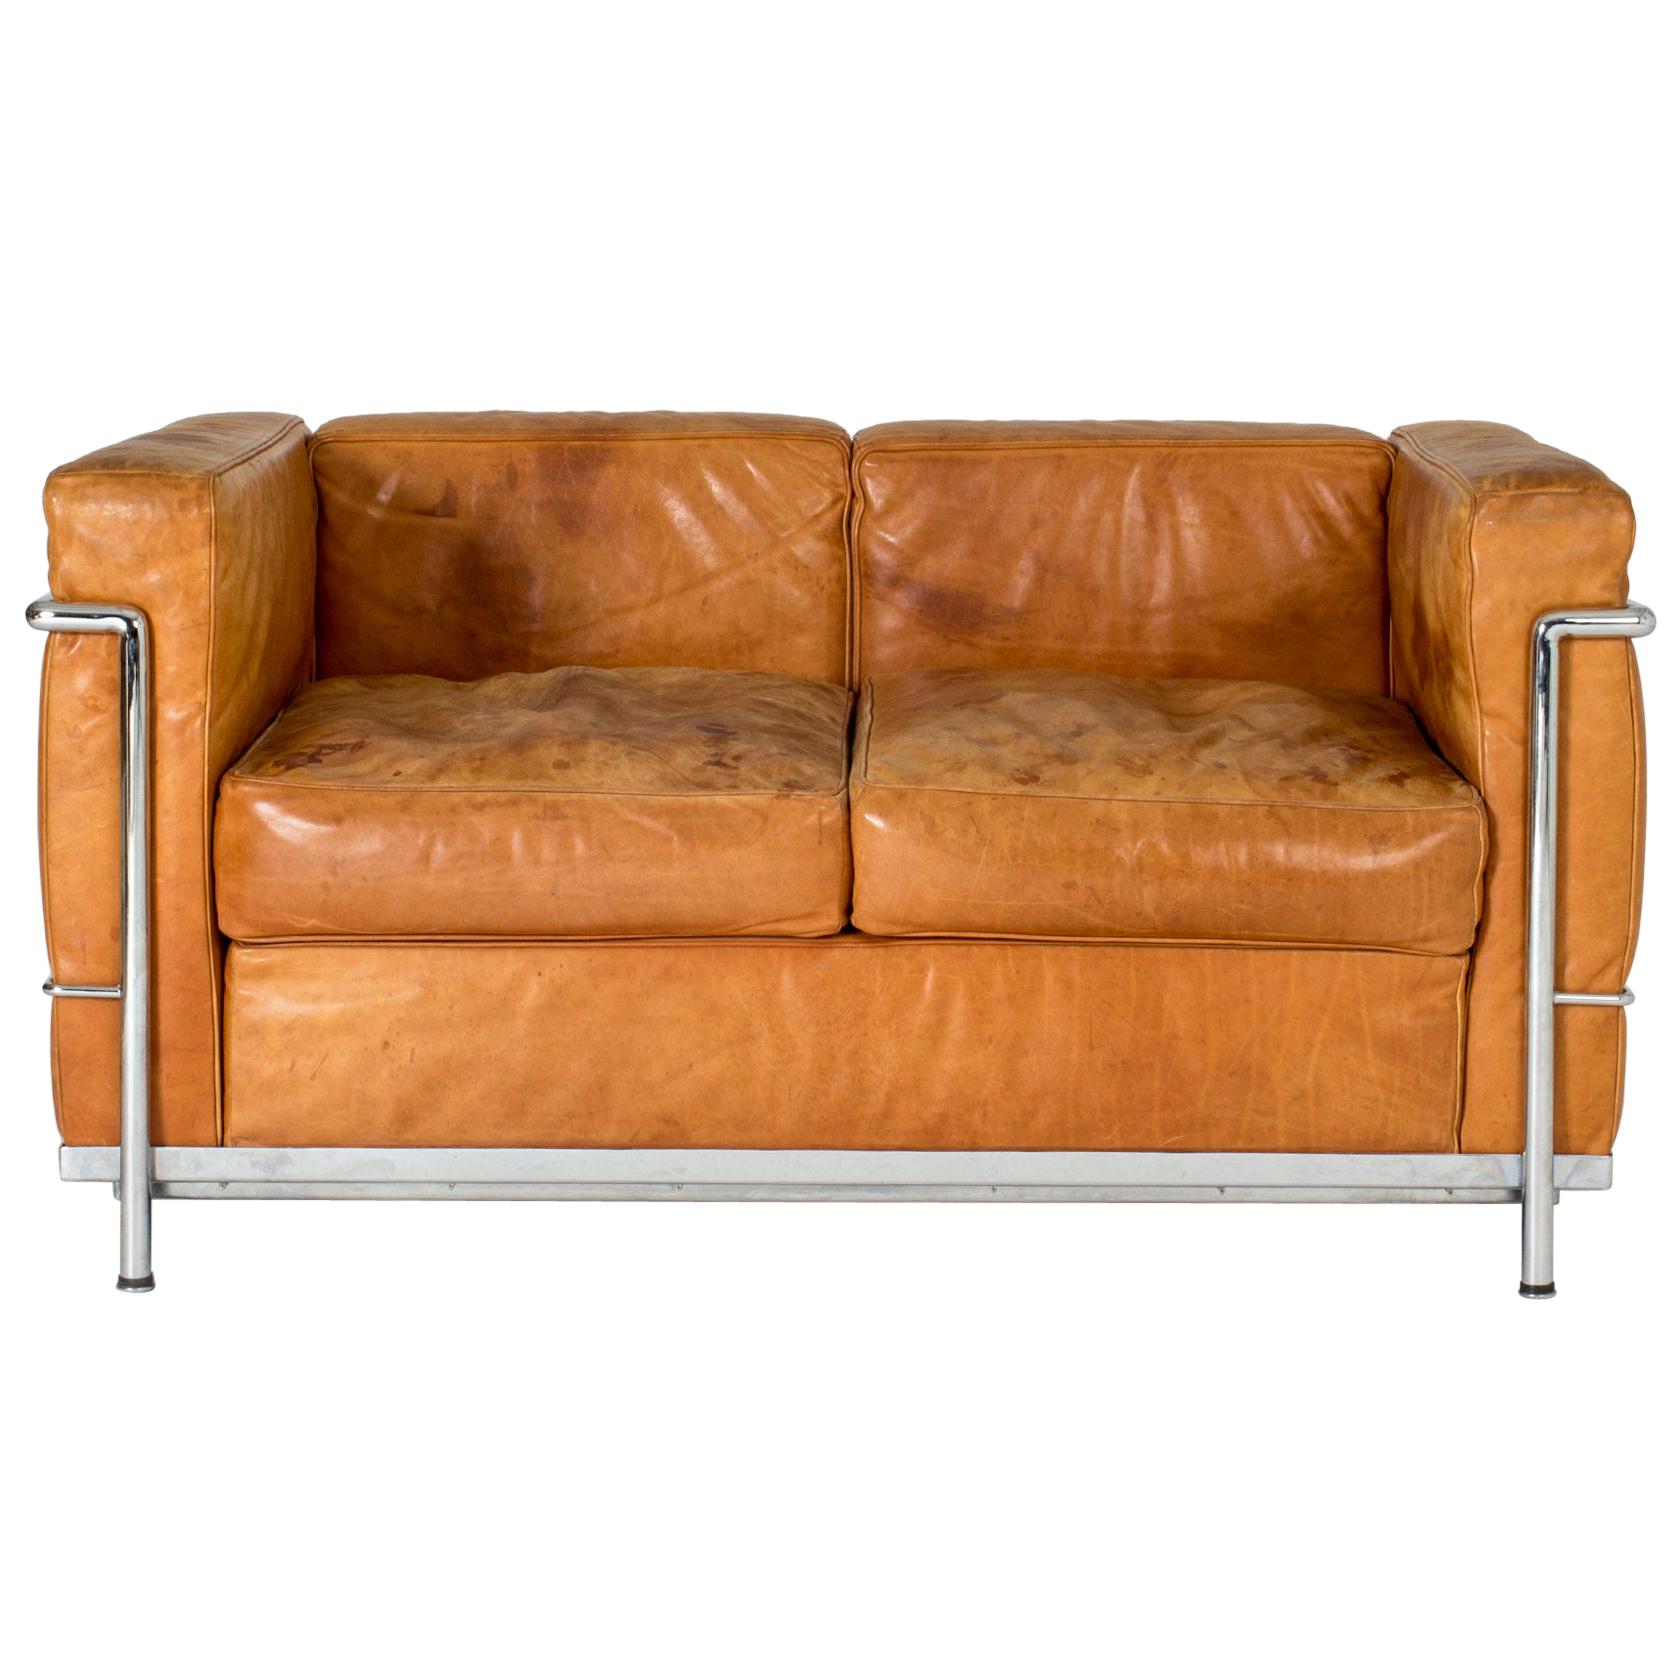 Cognac leather "LC2" sofa by Le Corbusier